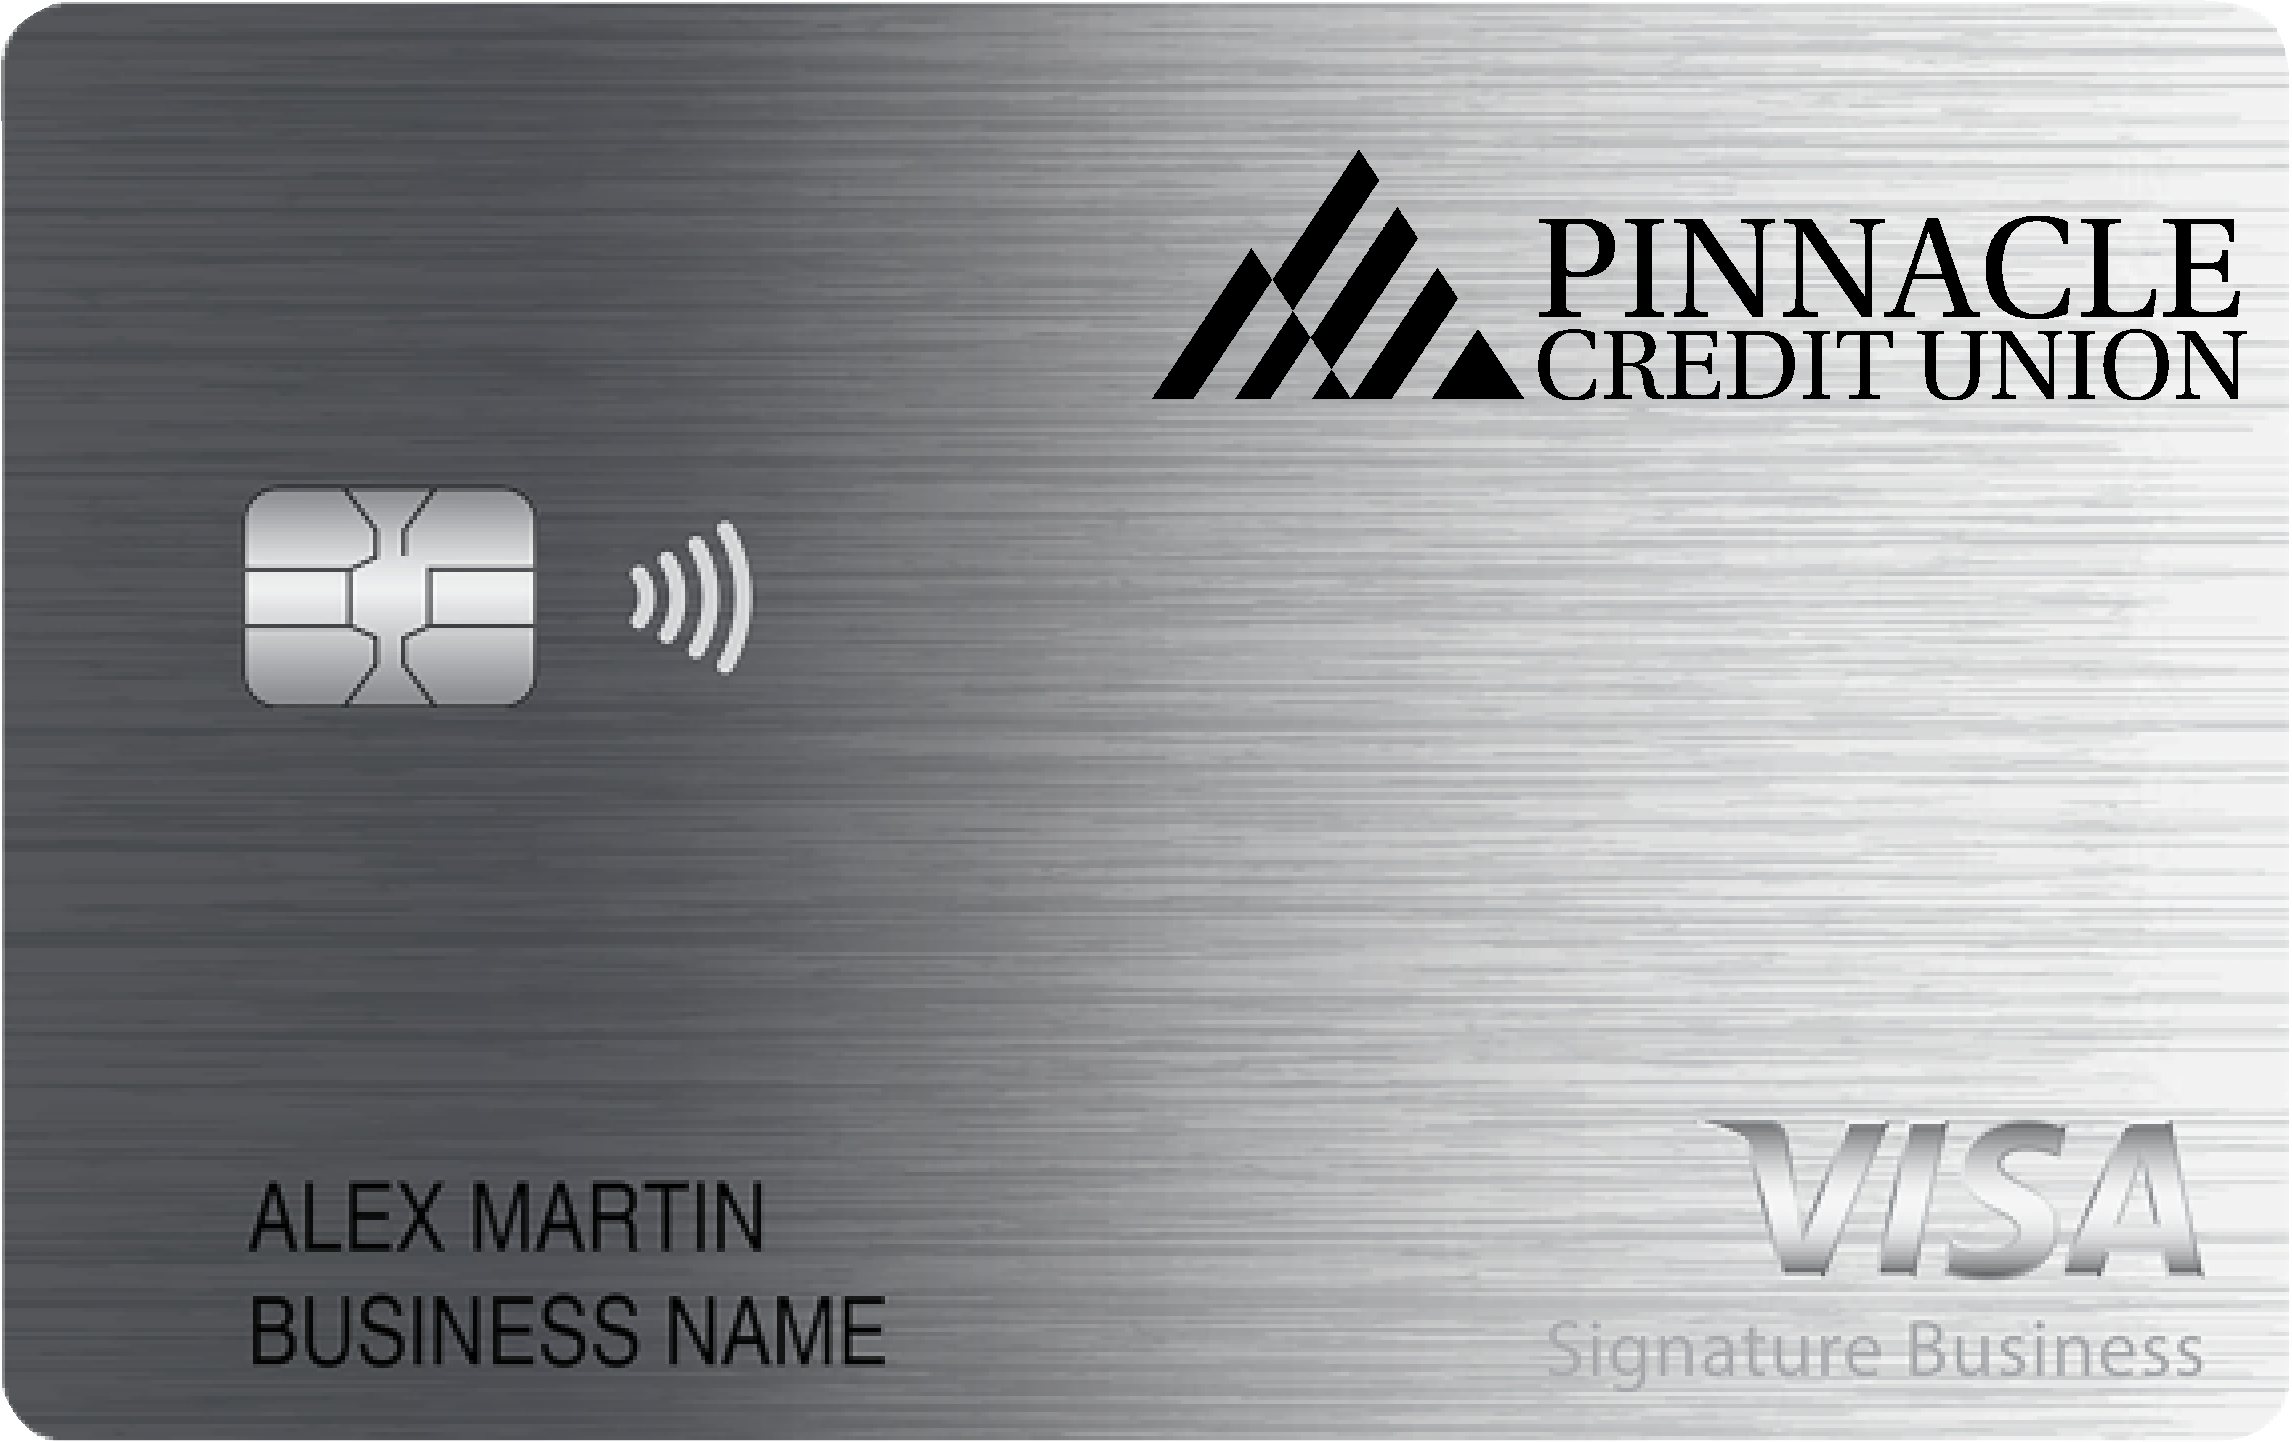 Pinnacle Credit Union Smart Business Rewards Card